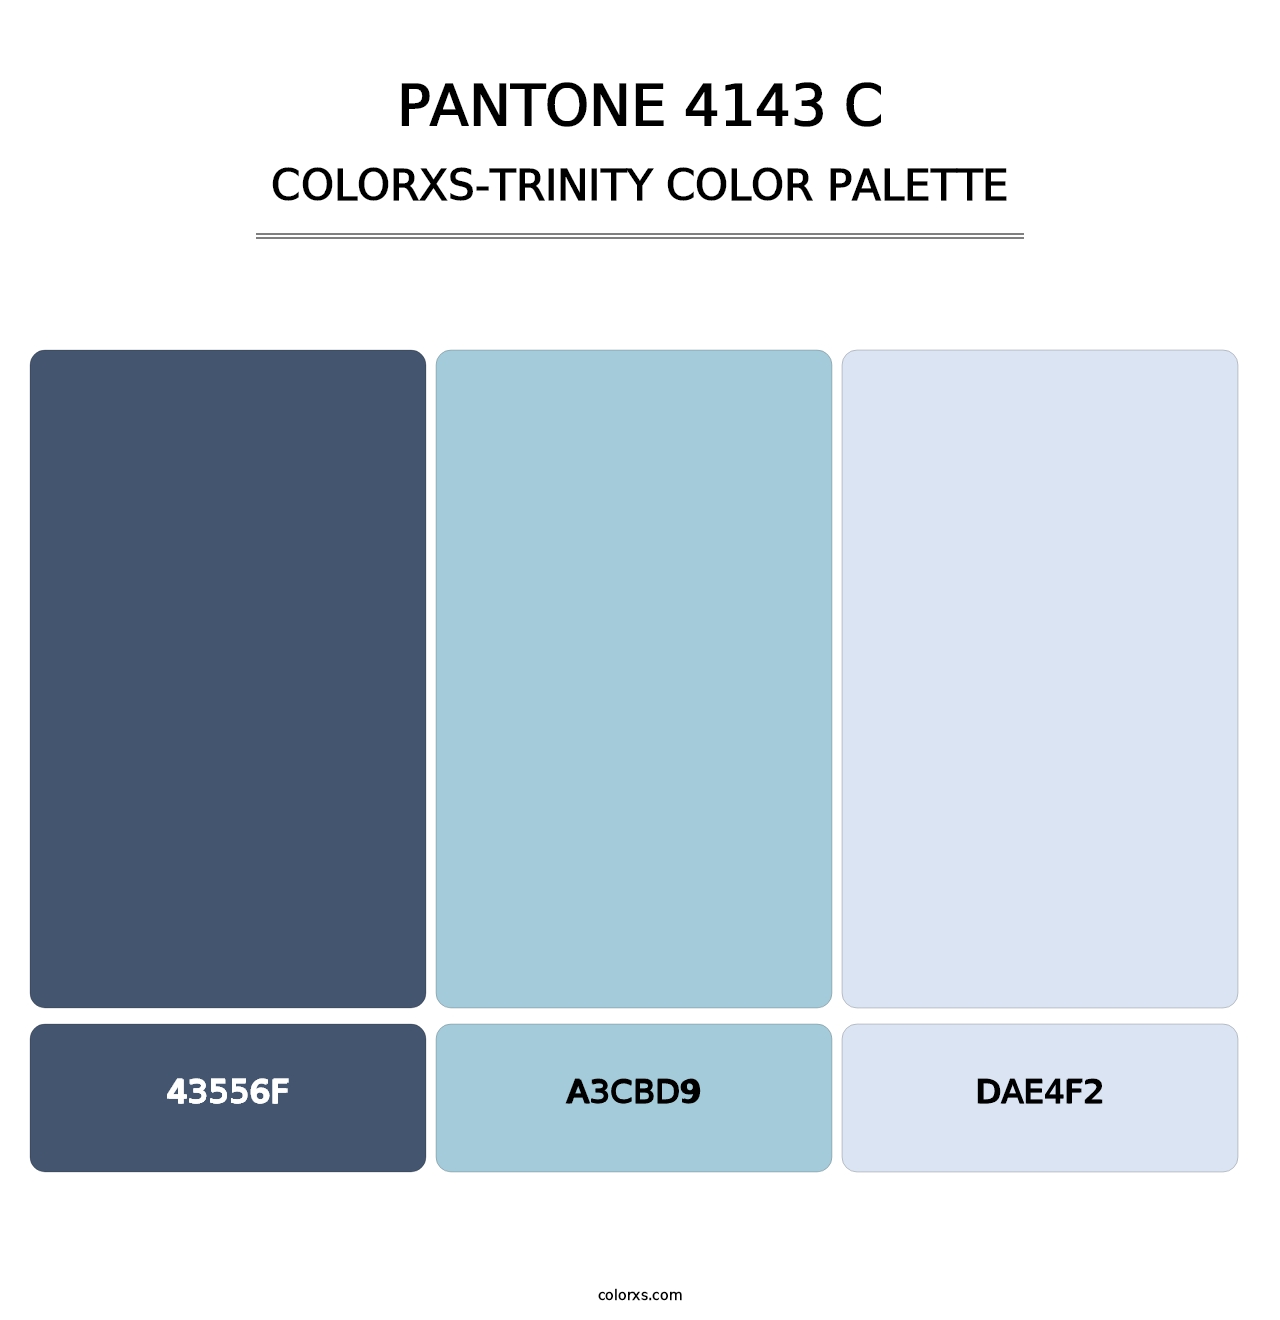 PANTONE 4143 C - Colorxs Trinity Palette